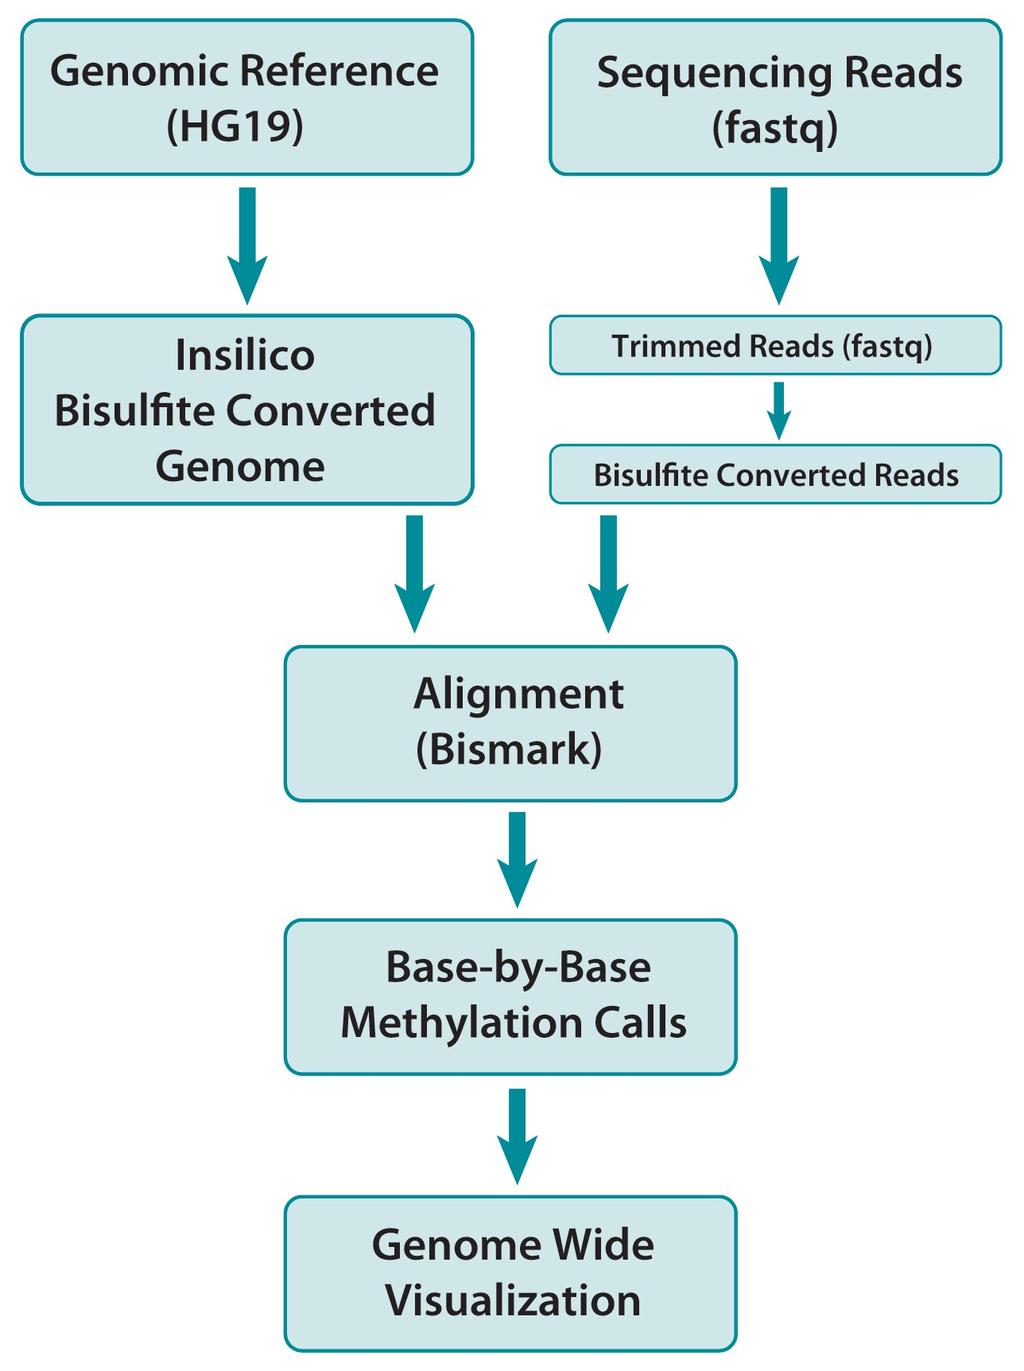 Agenda - Analysis: Bioinformatics Workflow Bioinformatics Analysis STEP 2 Generation of bisulfite converted genome STEP 1 Quality Control STEP 3